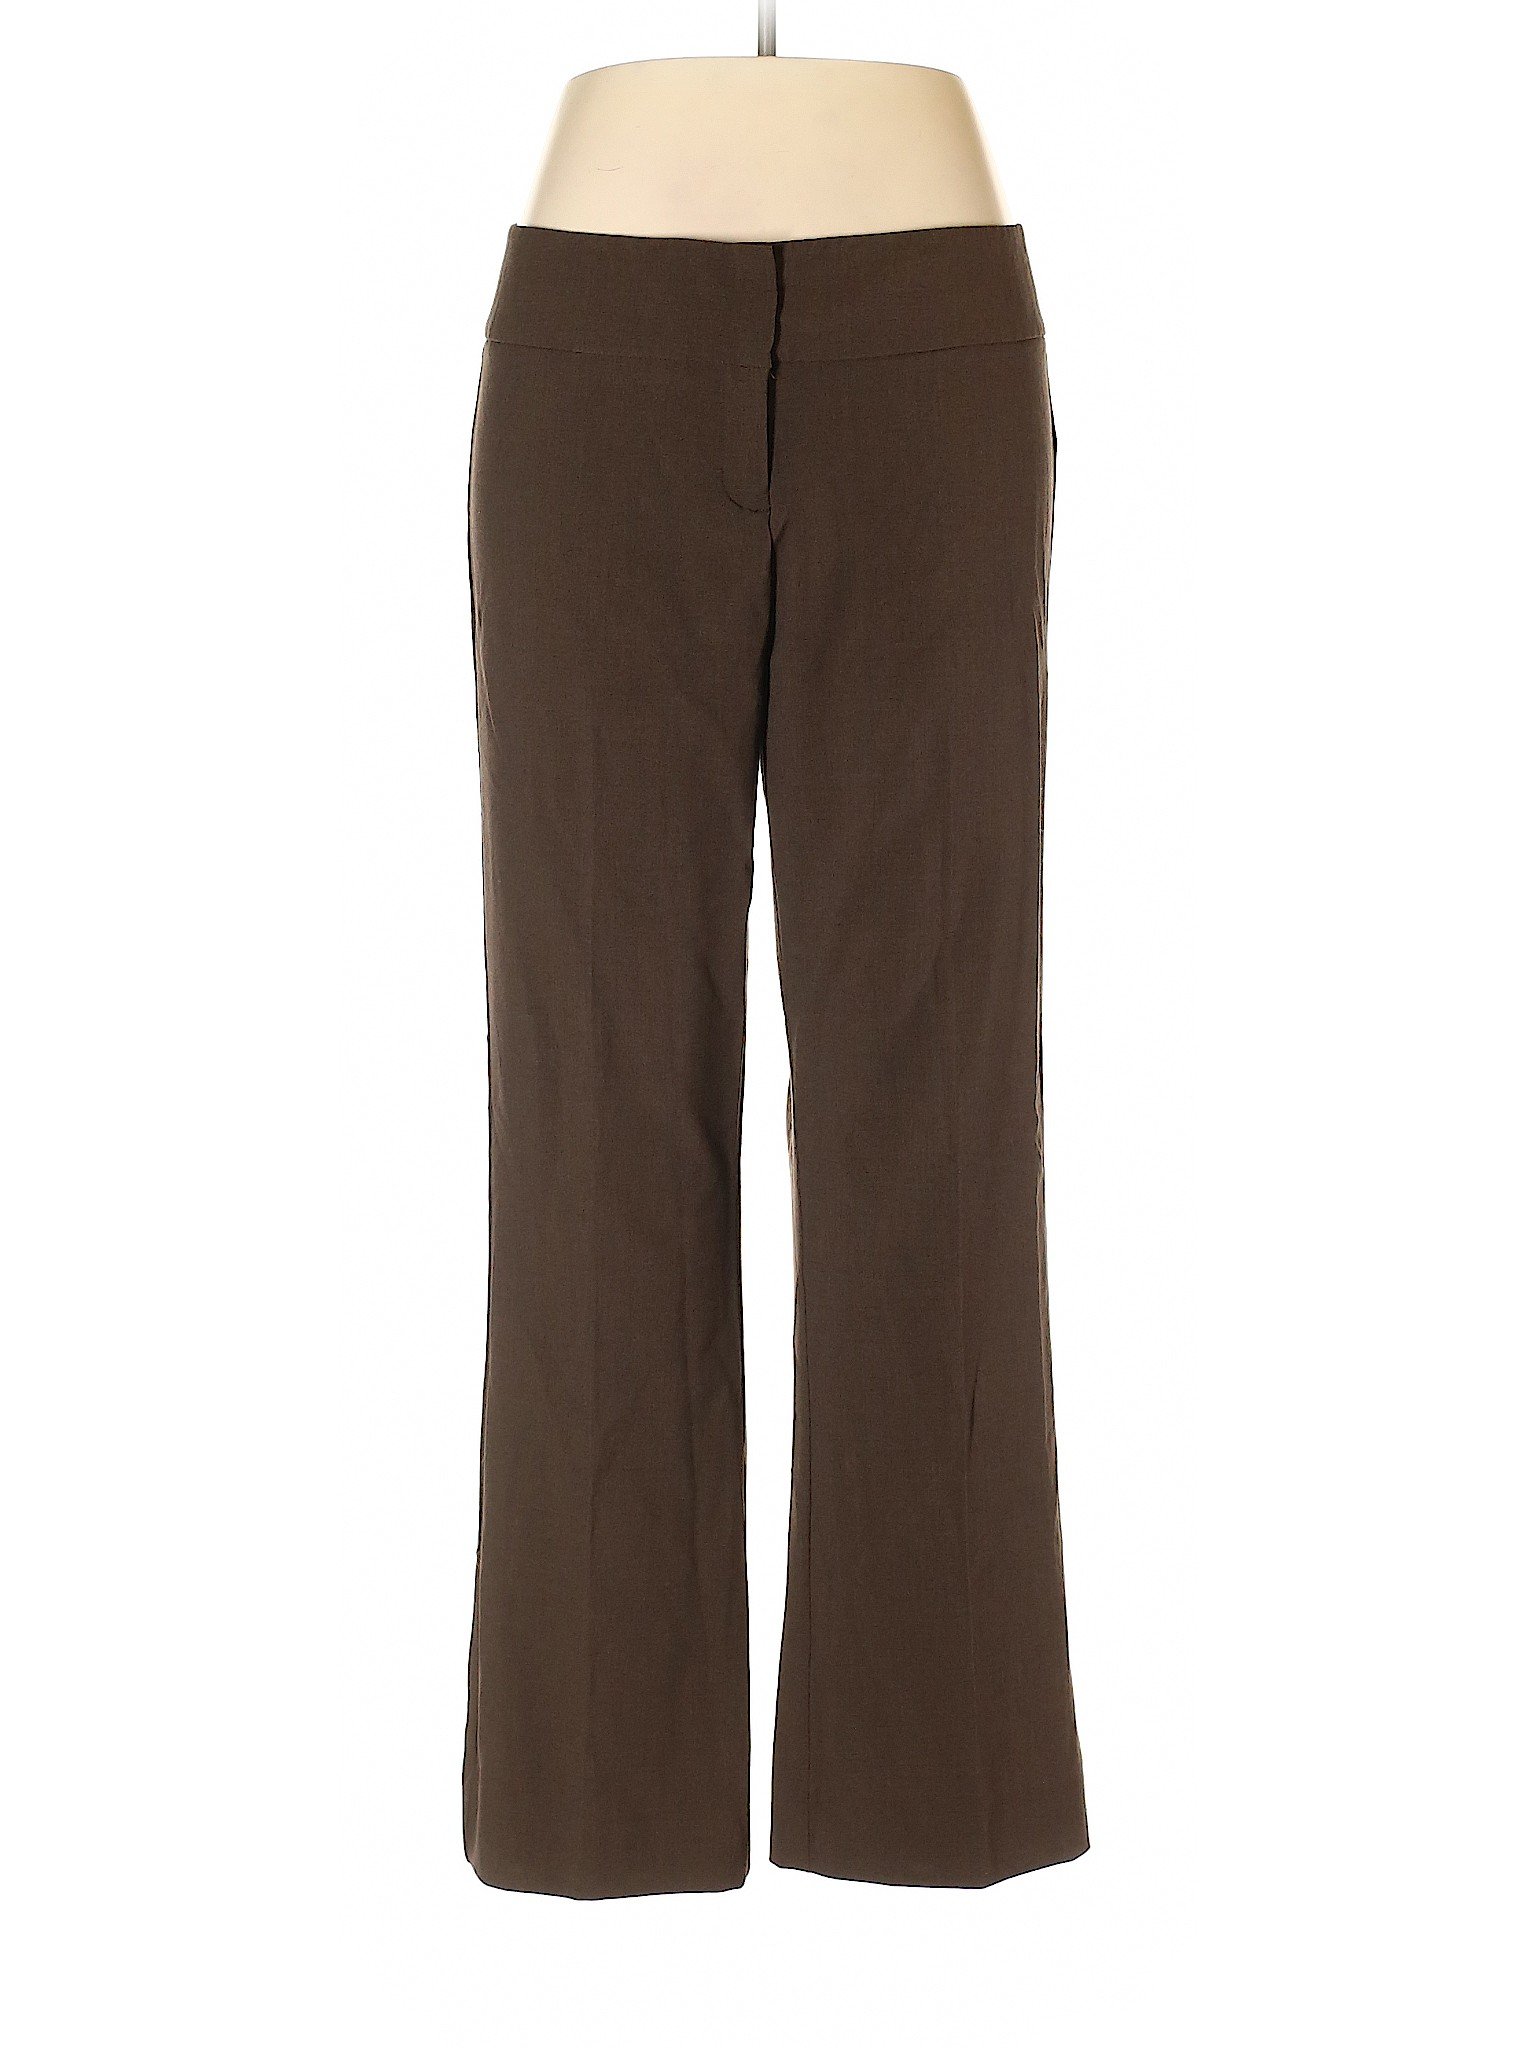 Kenneth Cole New York Women Brown Dress Pants 12 | eBay